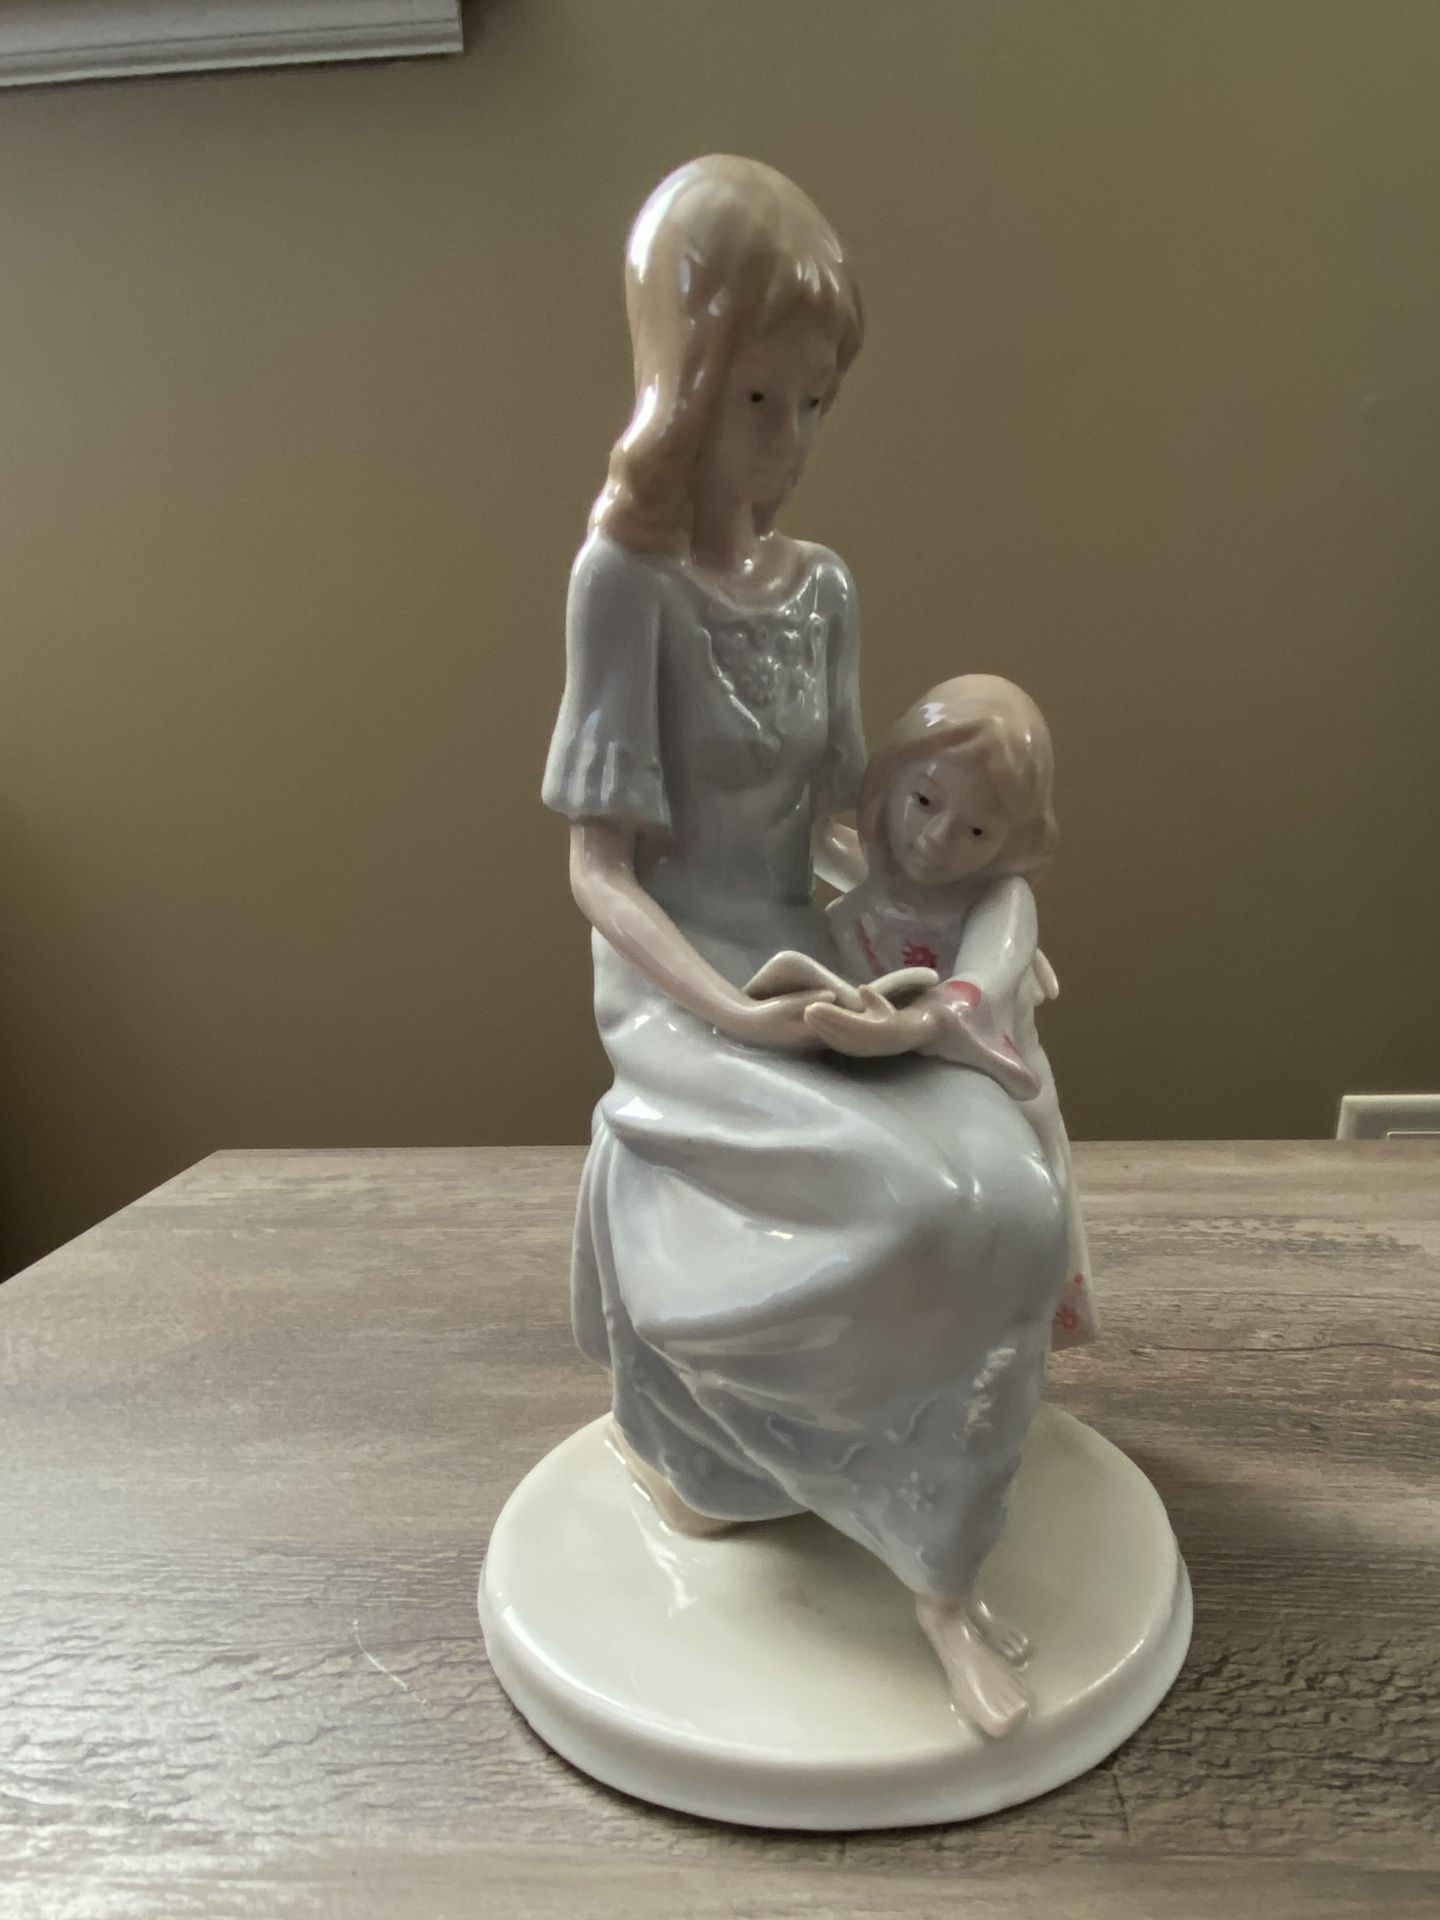 Imitation Lladro “Bedtime Story” figurine 